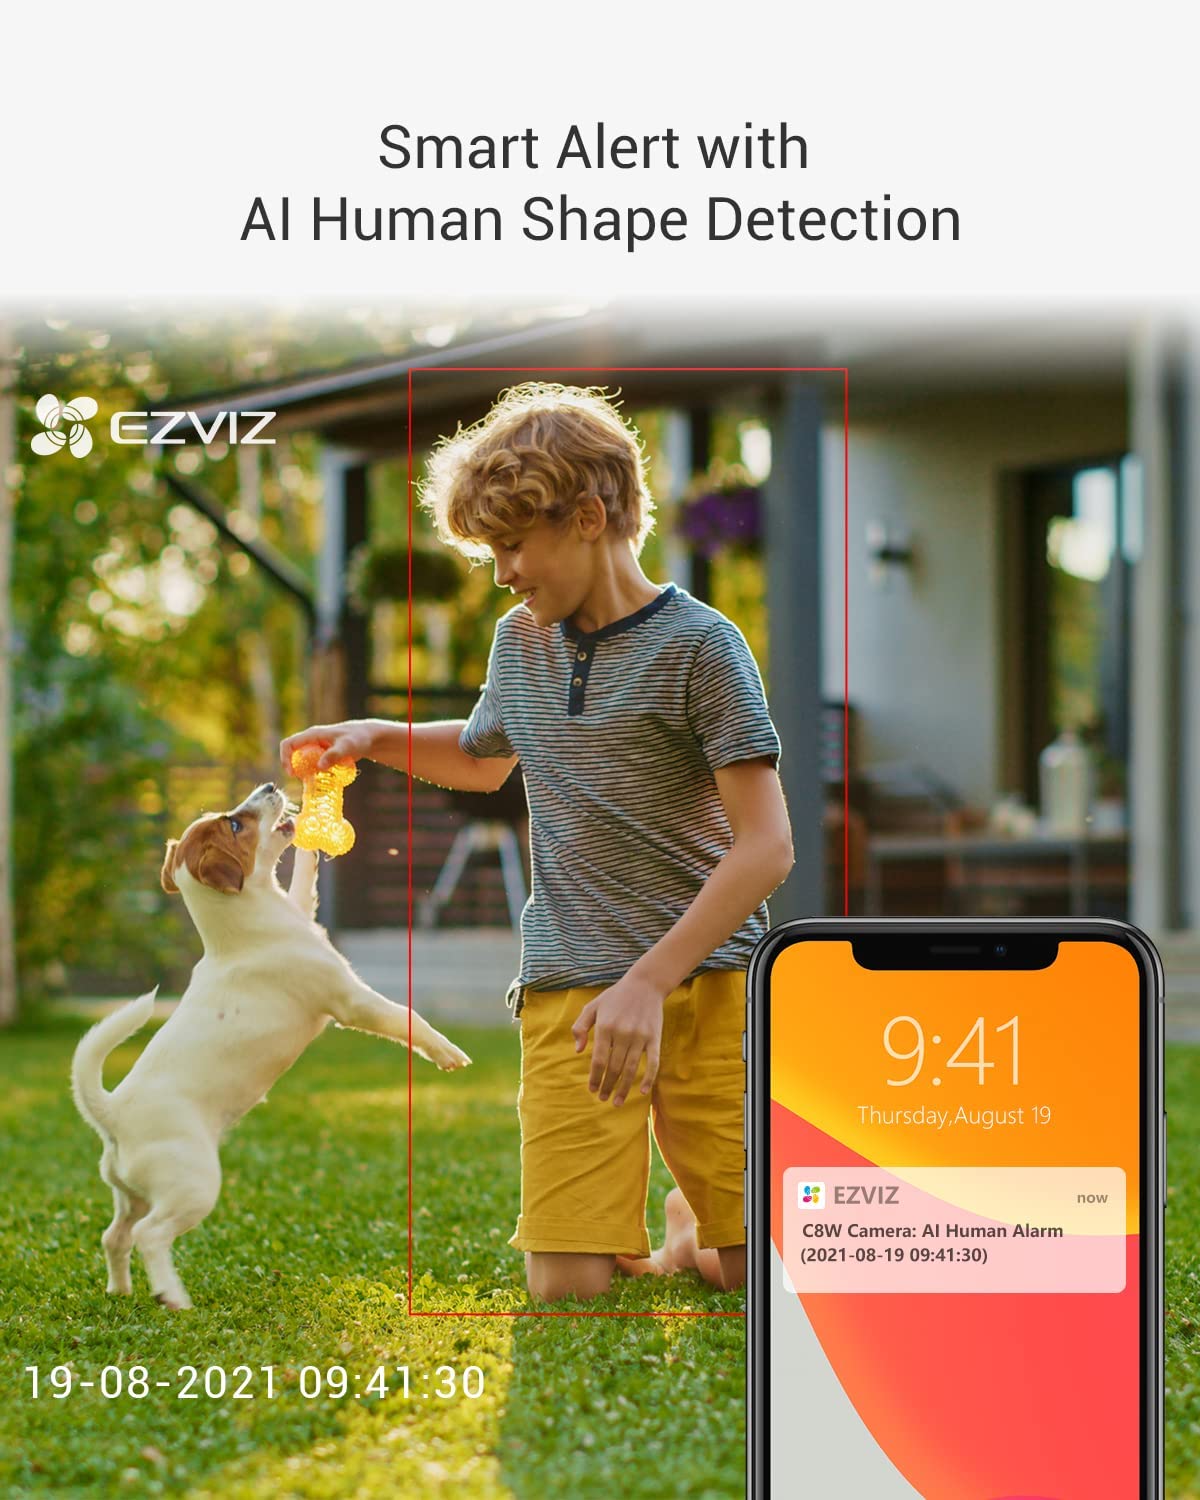 Ezviz Wireless Security Camera 2K WiFi Pan & Tilt Spotlight, Smart Home AI Person Detection & DIY Kit Active Defense, Color Night Vision & Two-Way Audio